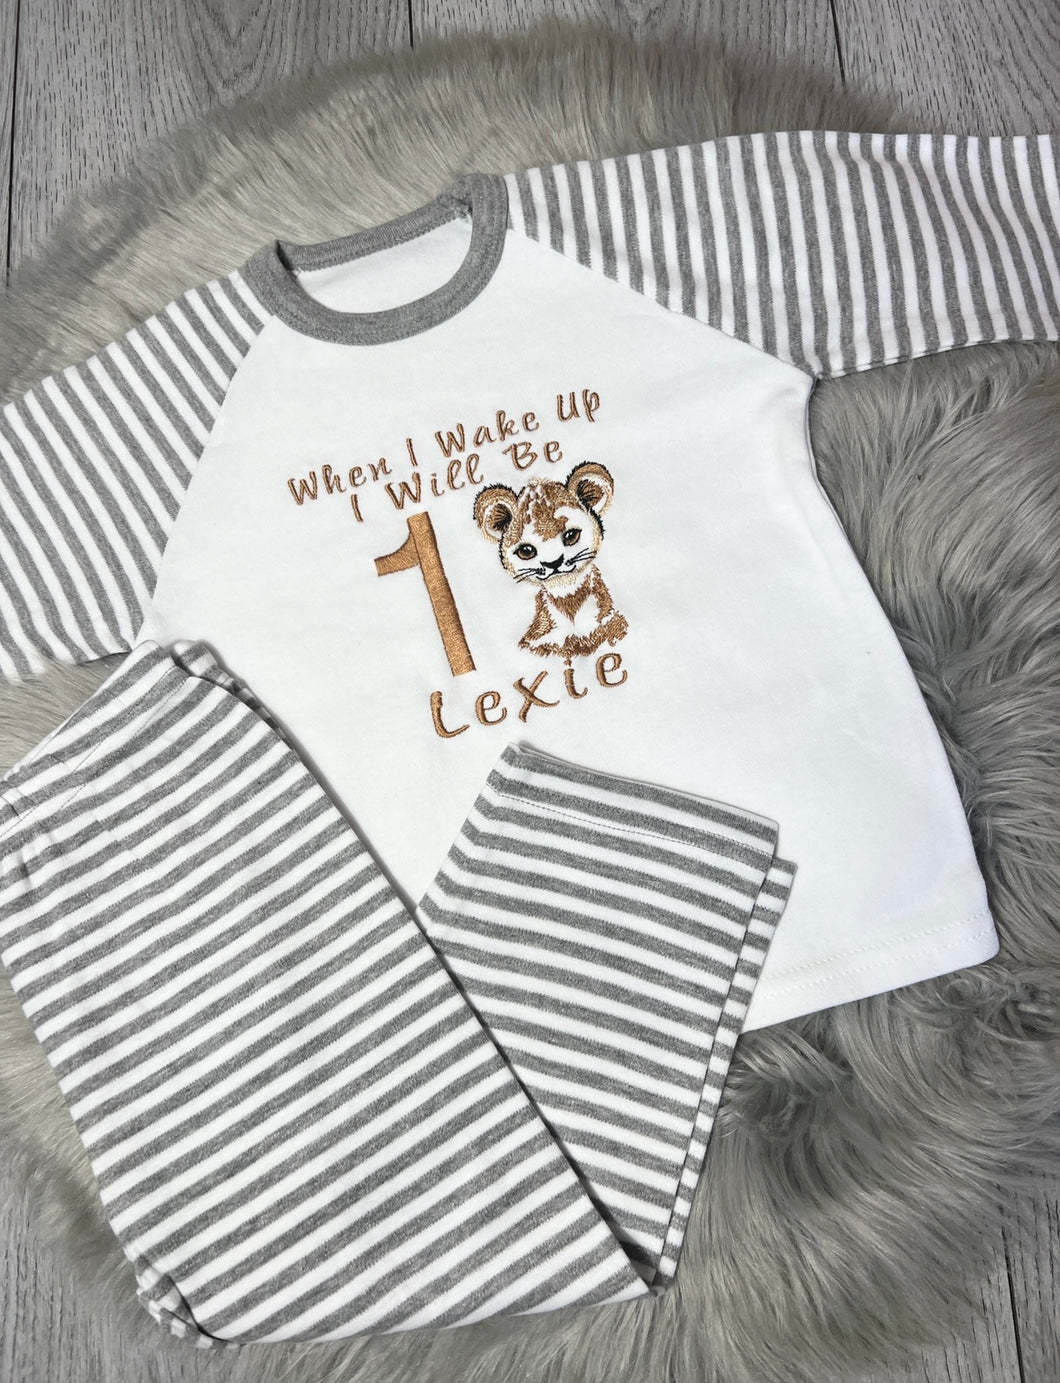 Personalised Children's Embroidered Cub Birthday Pyjama's